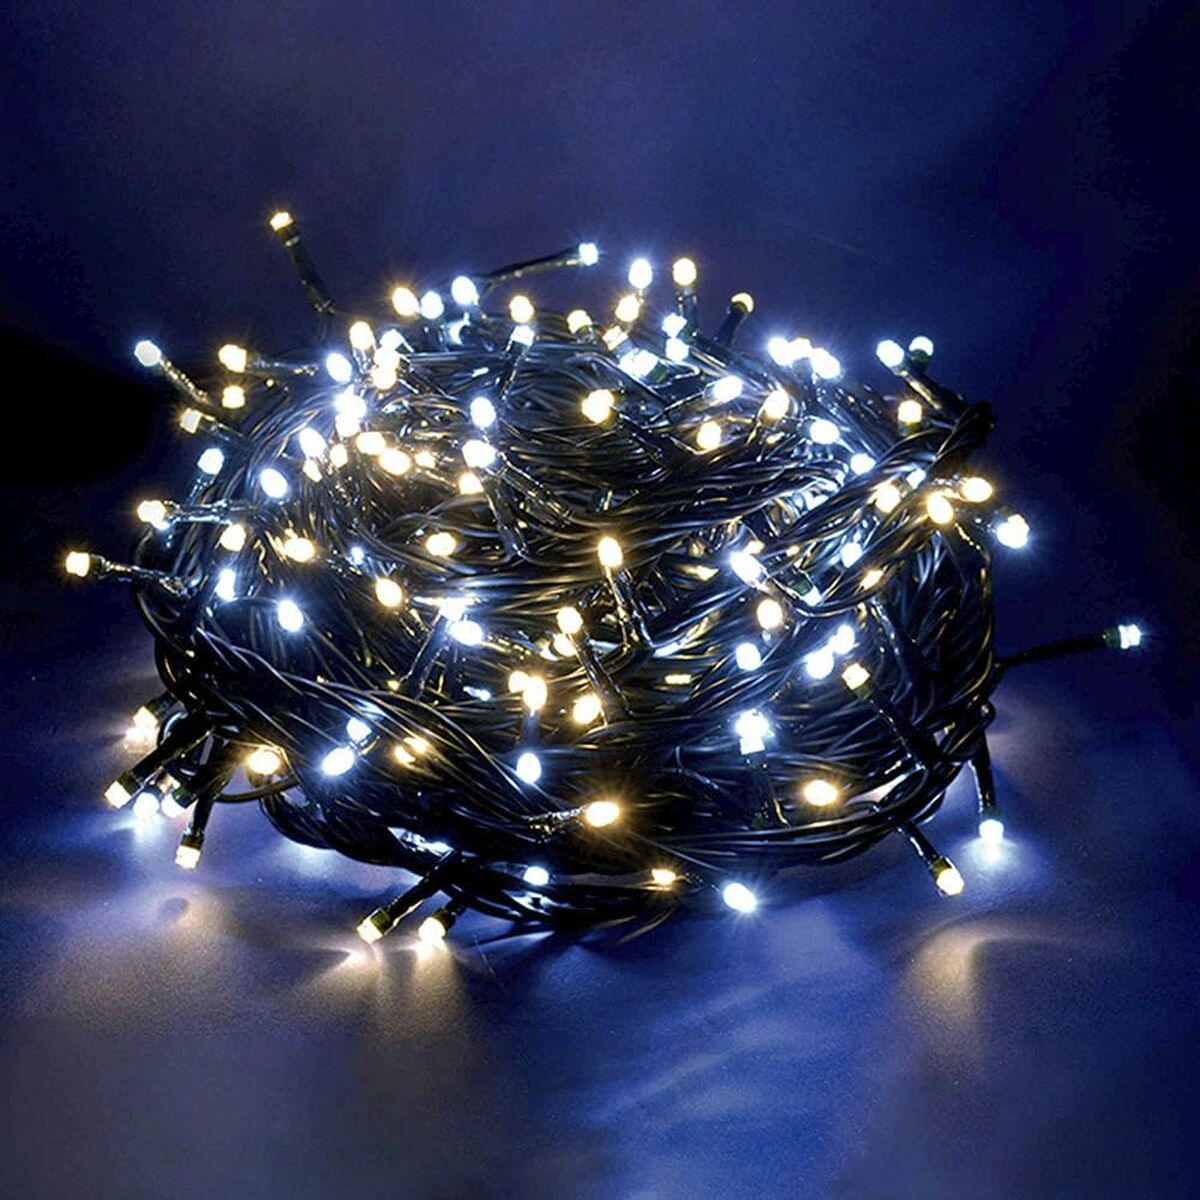 Wreath of LED Lights 50 m White 6 W Christmas